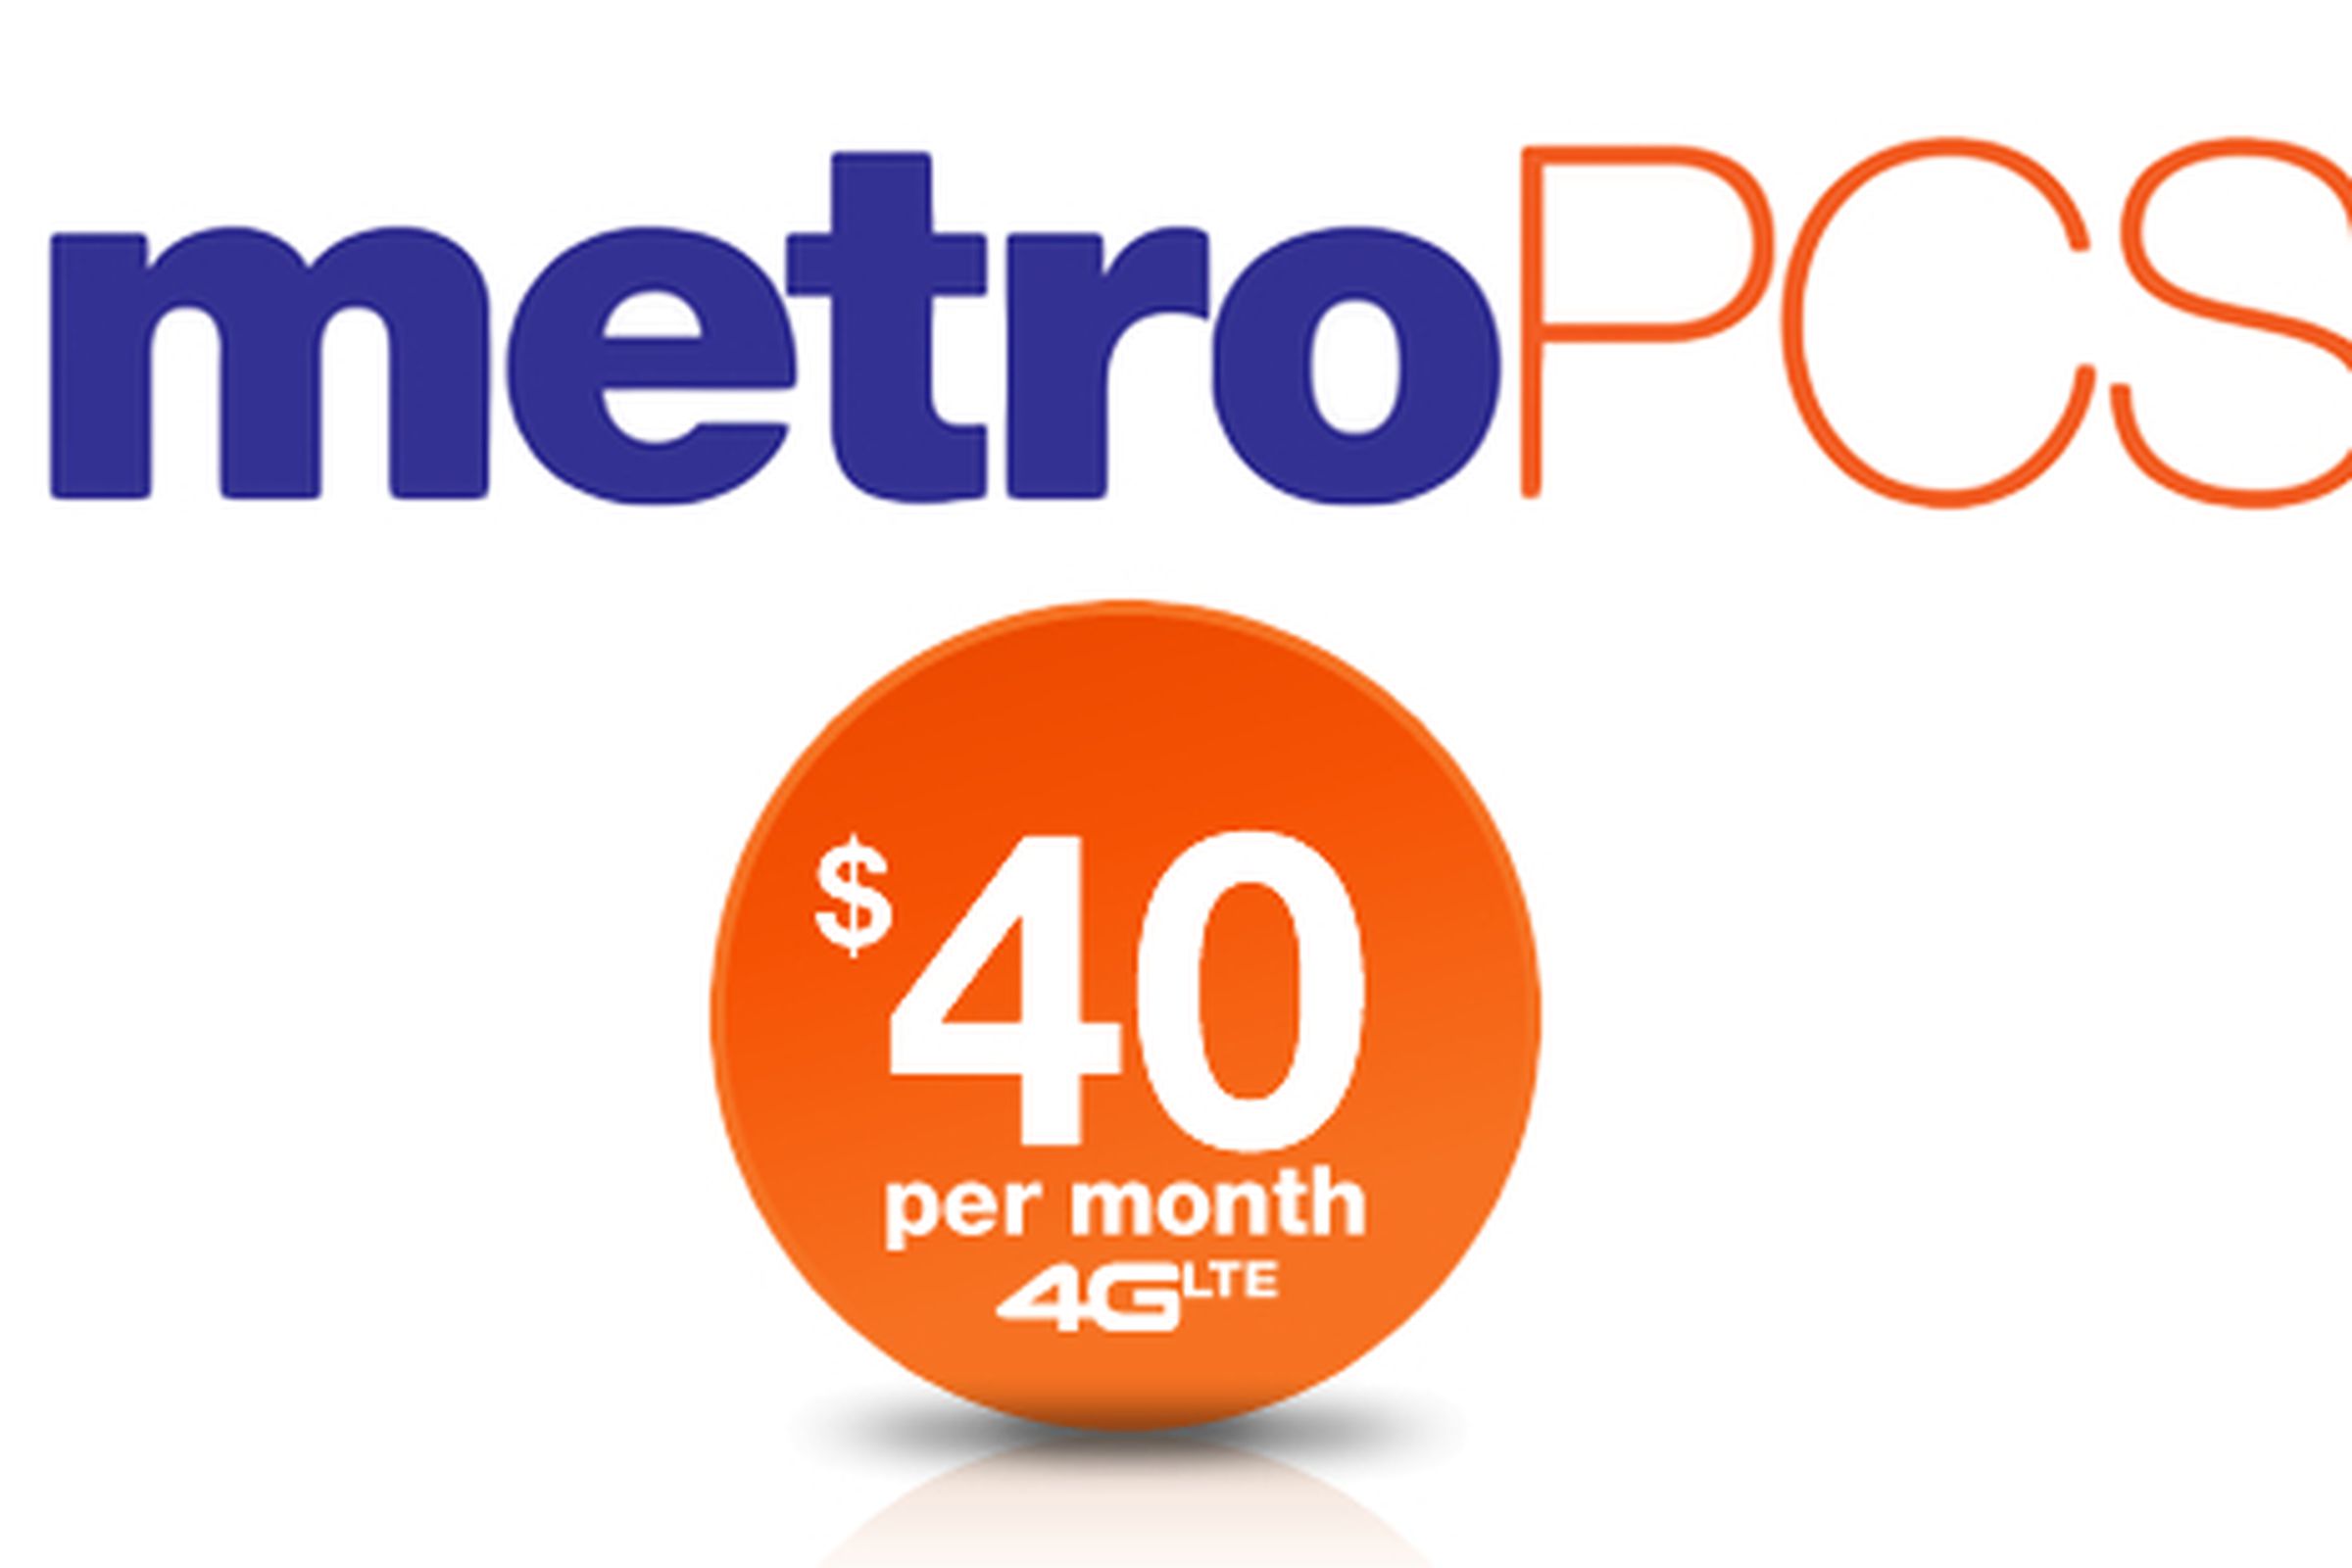 MetroPCS $40 unlimited plan